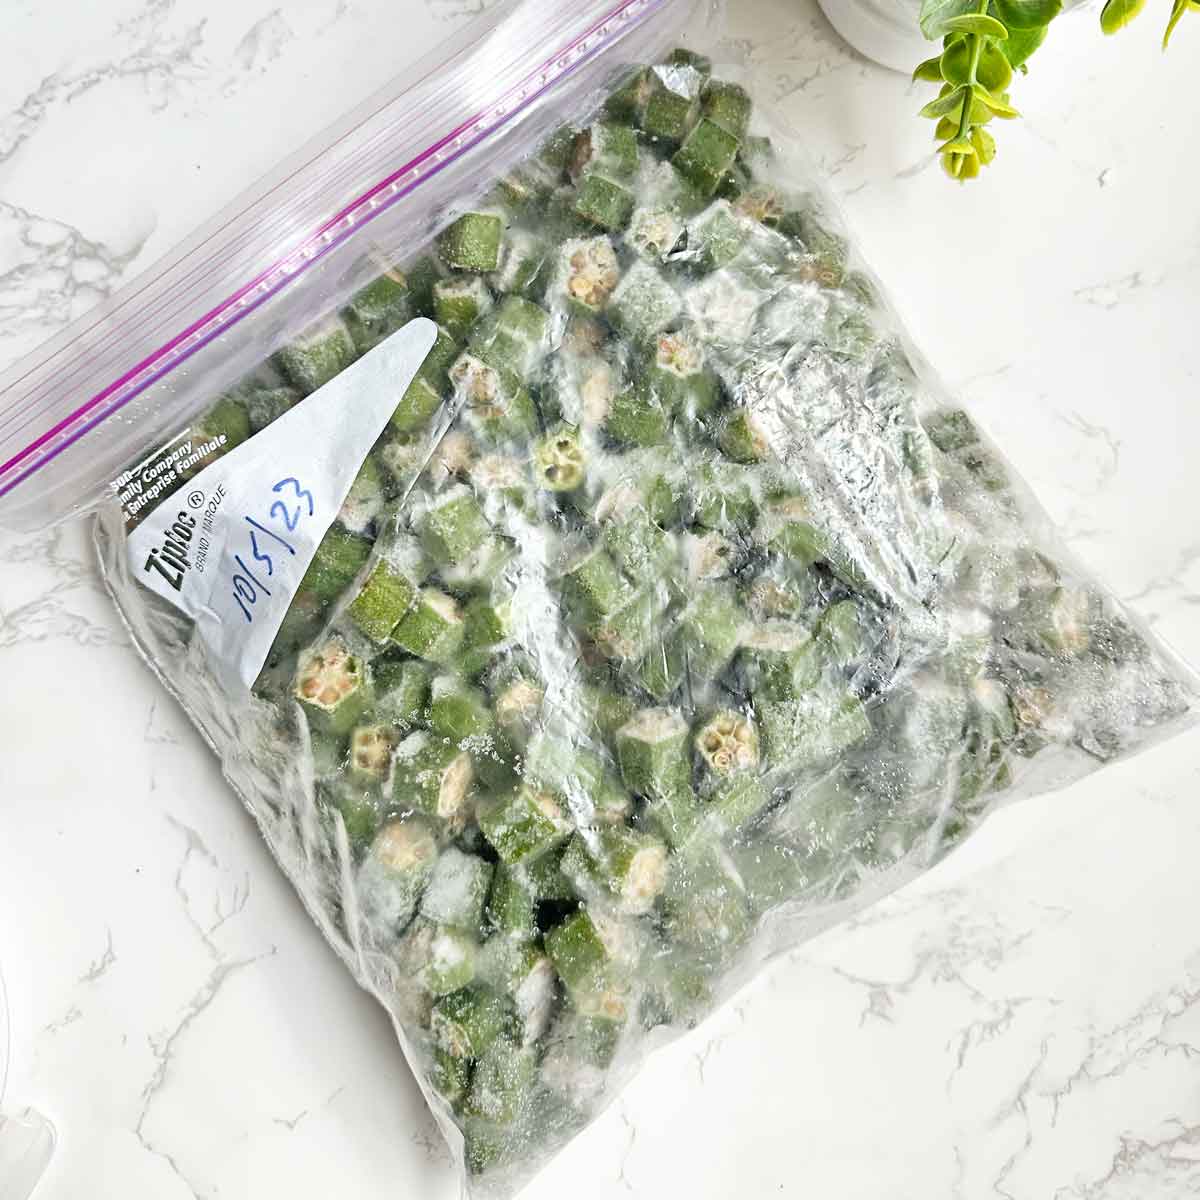 frozen okra in a ziplock bag.